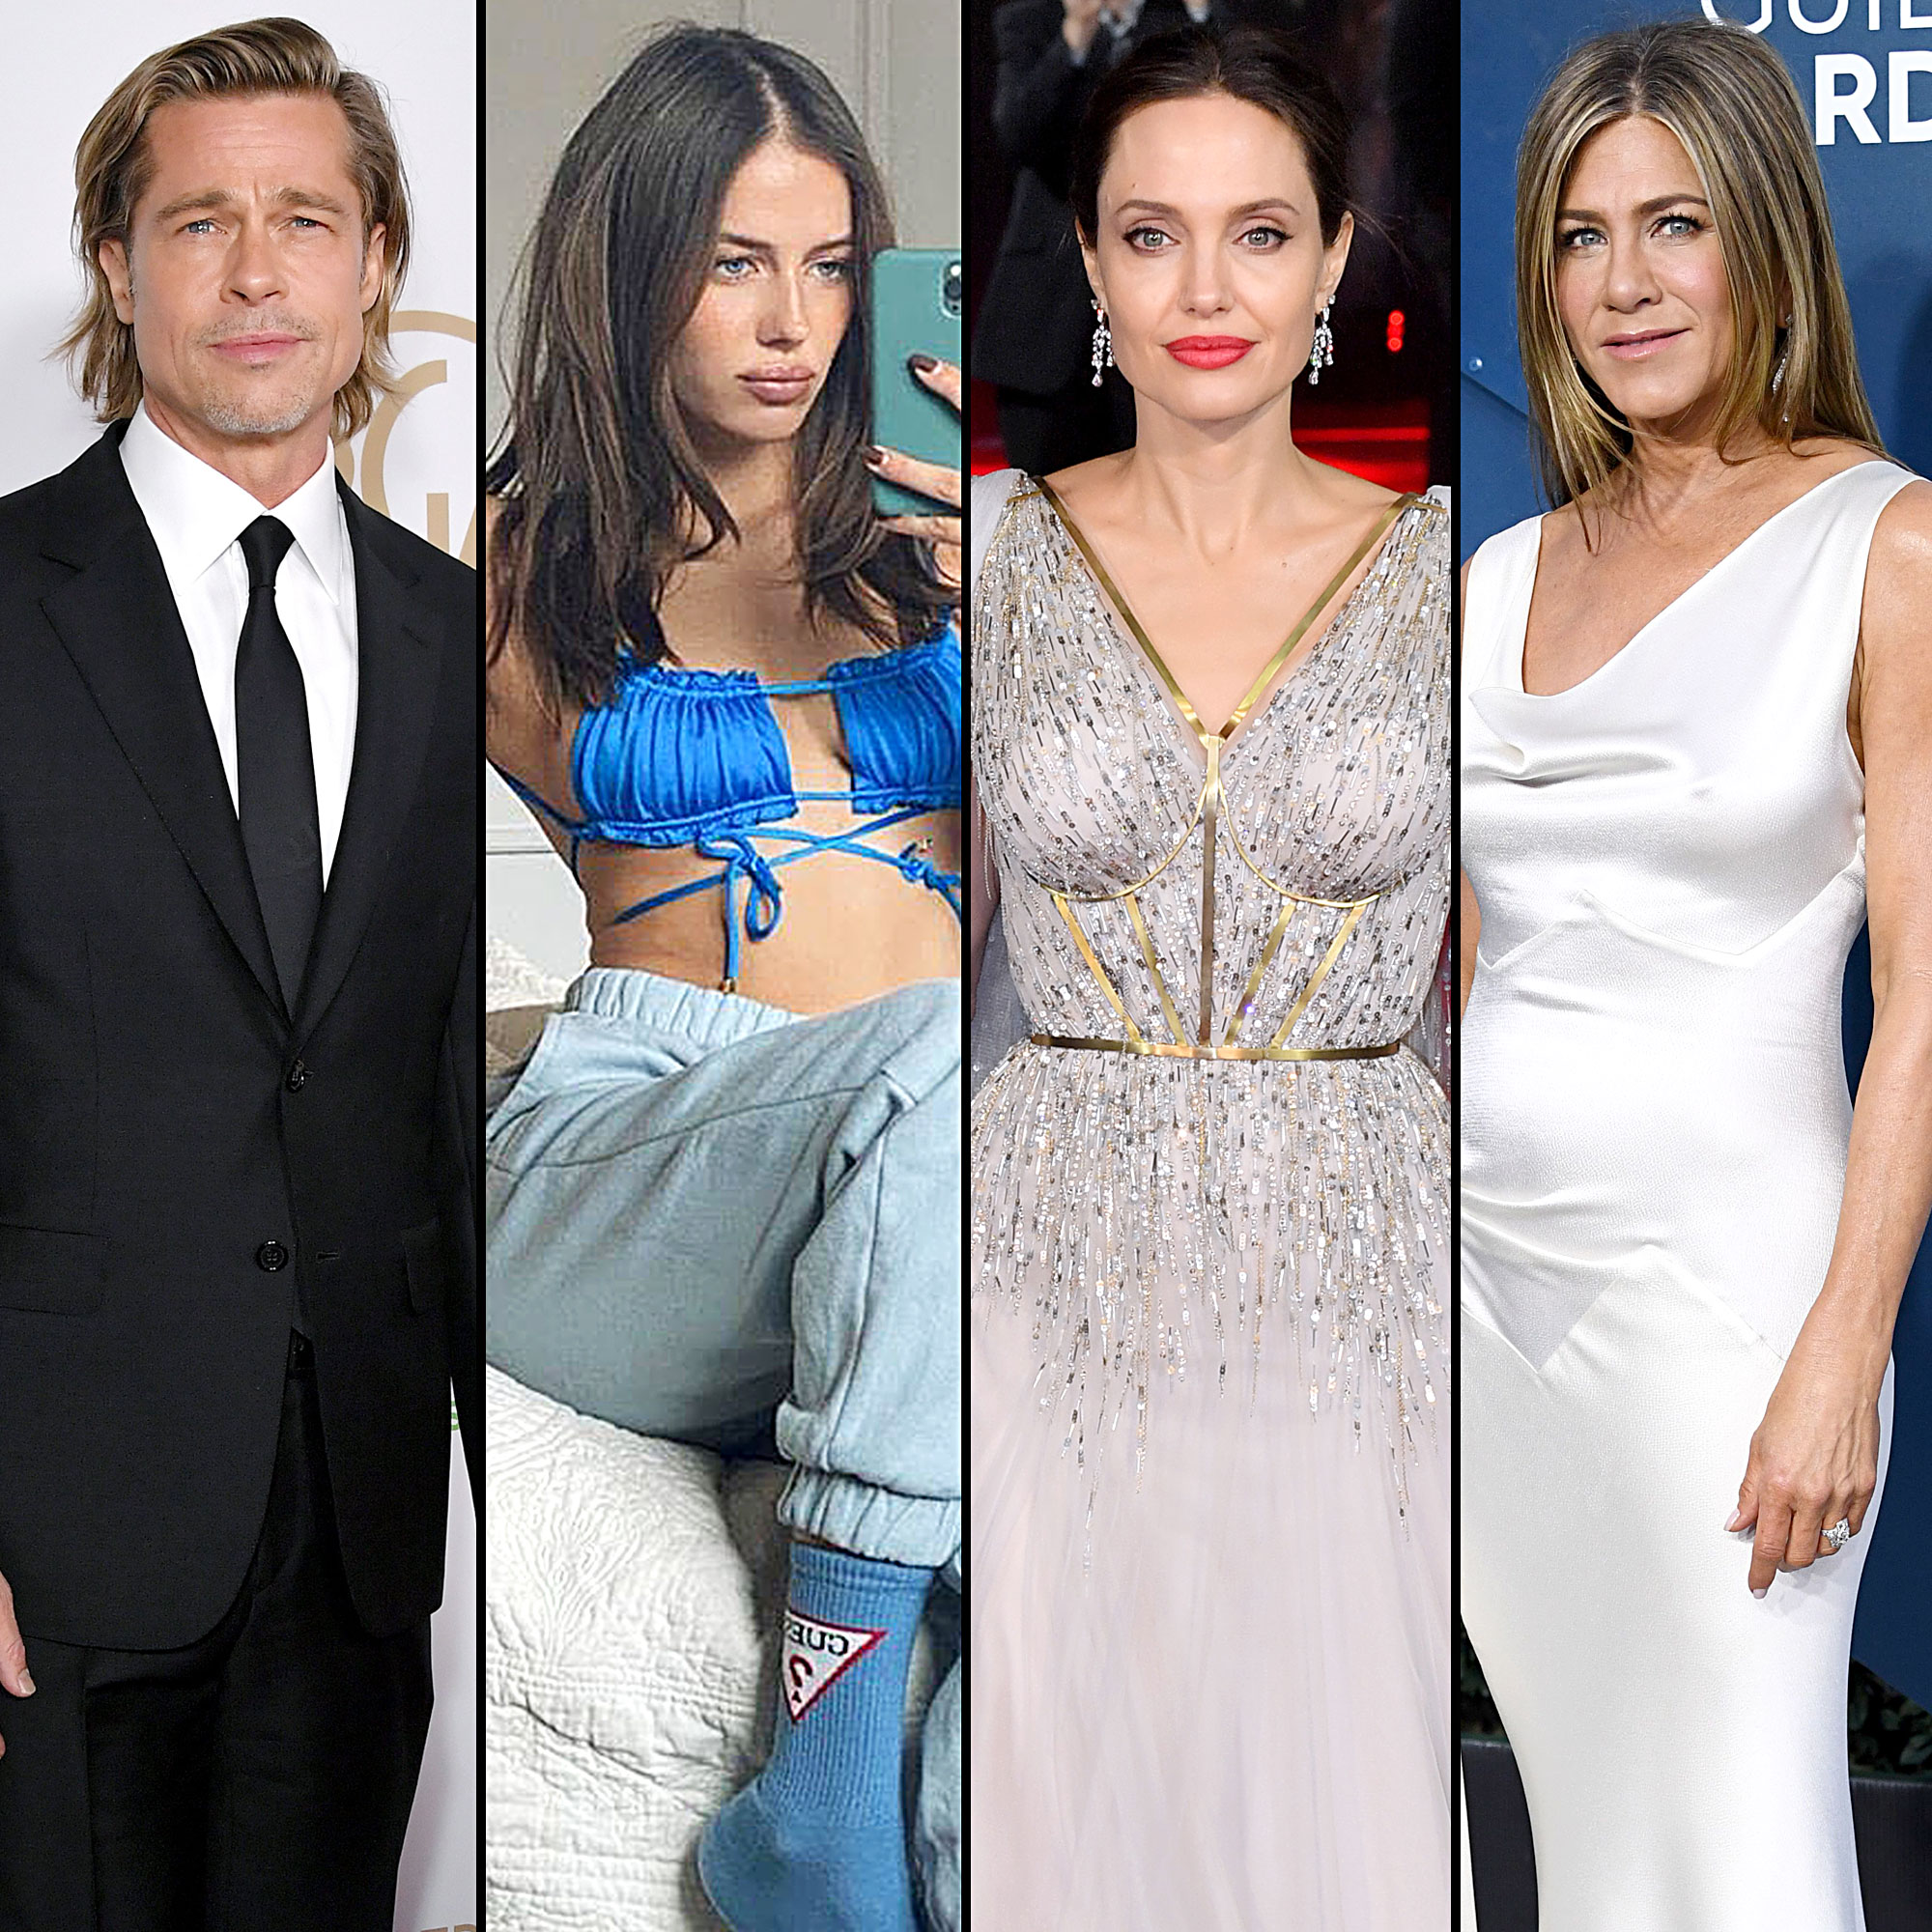 Shiloh Jolie-Pitt Is 'Dating': 'Low-key' Love Life